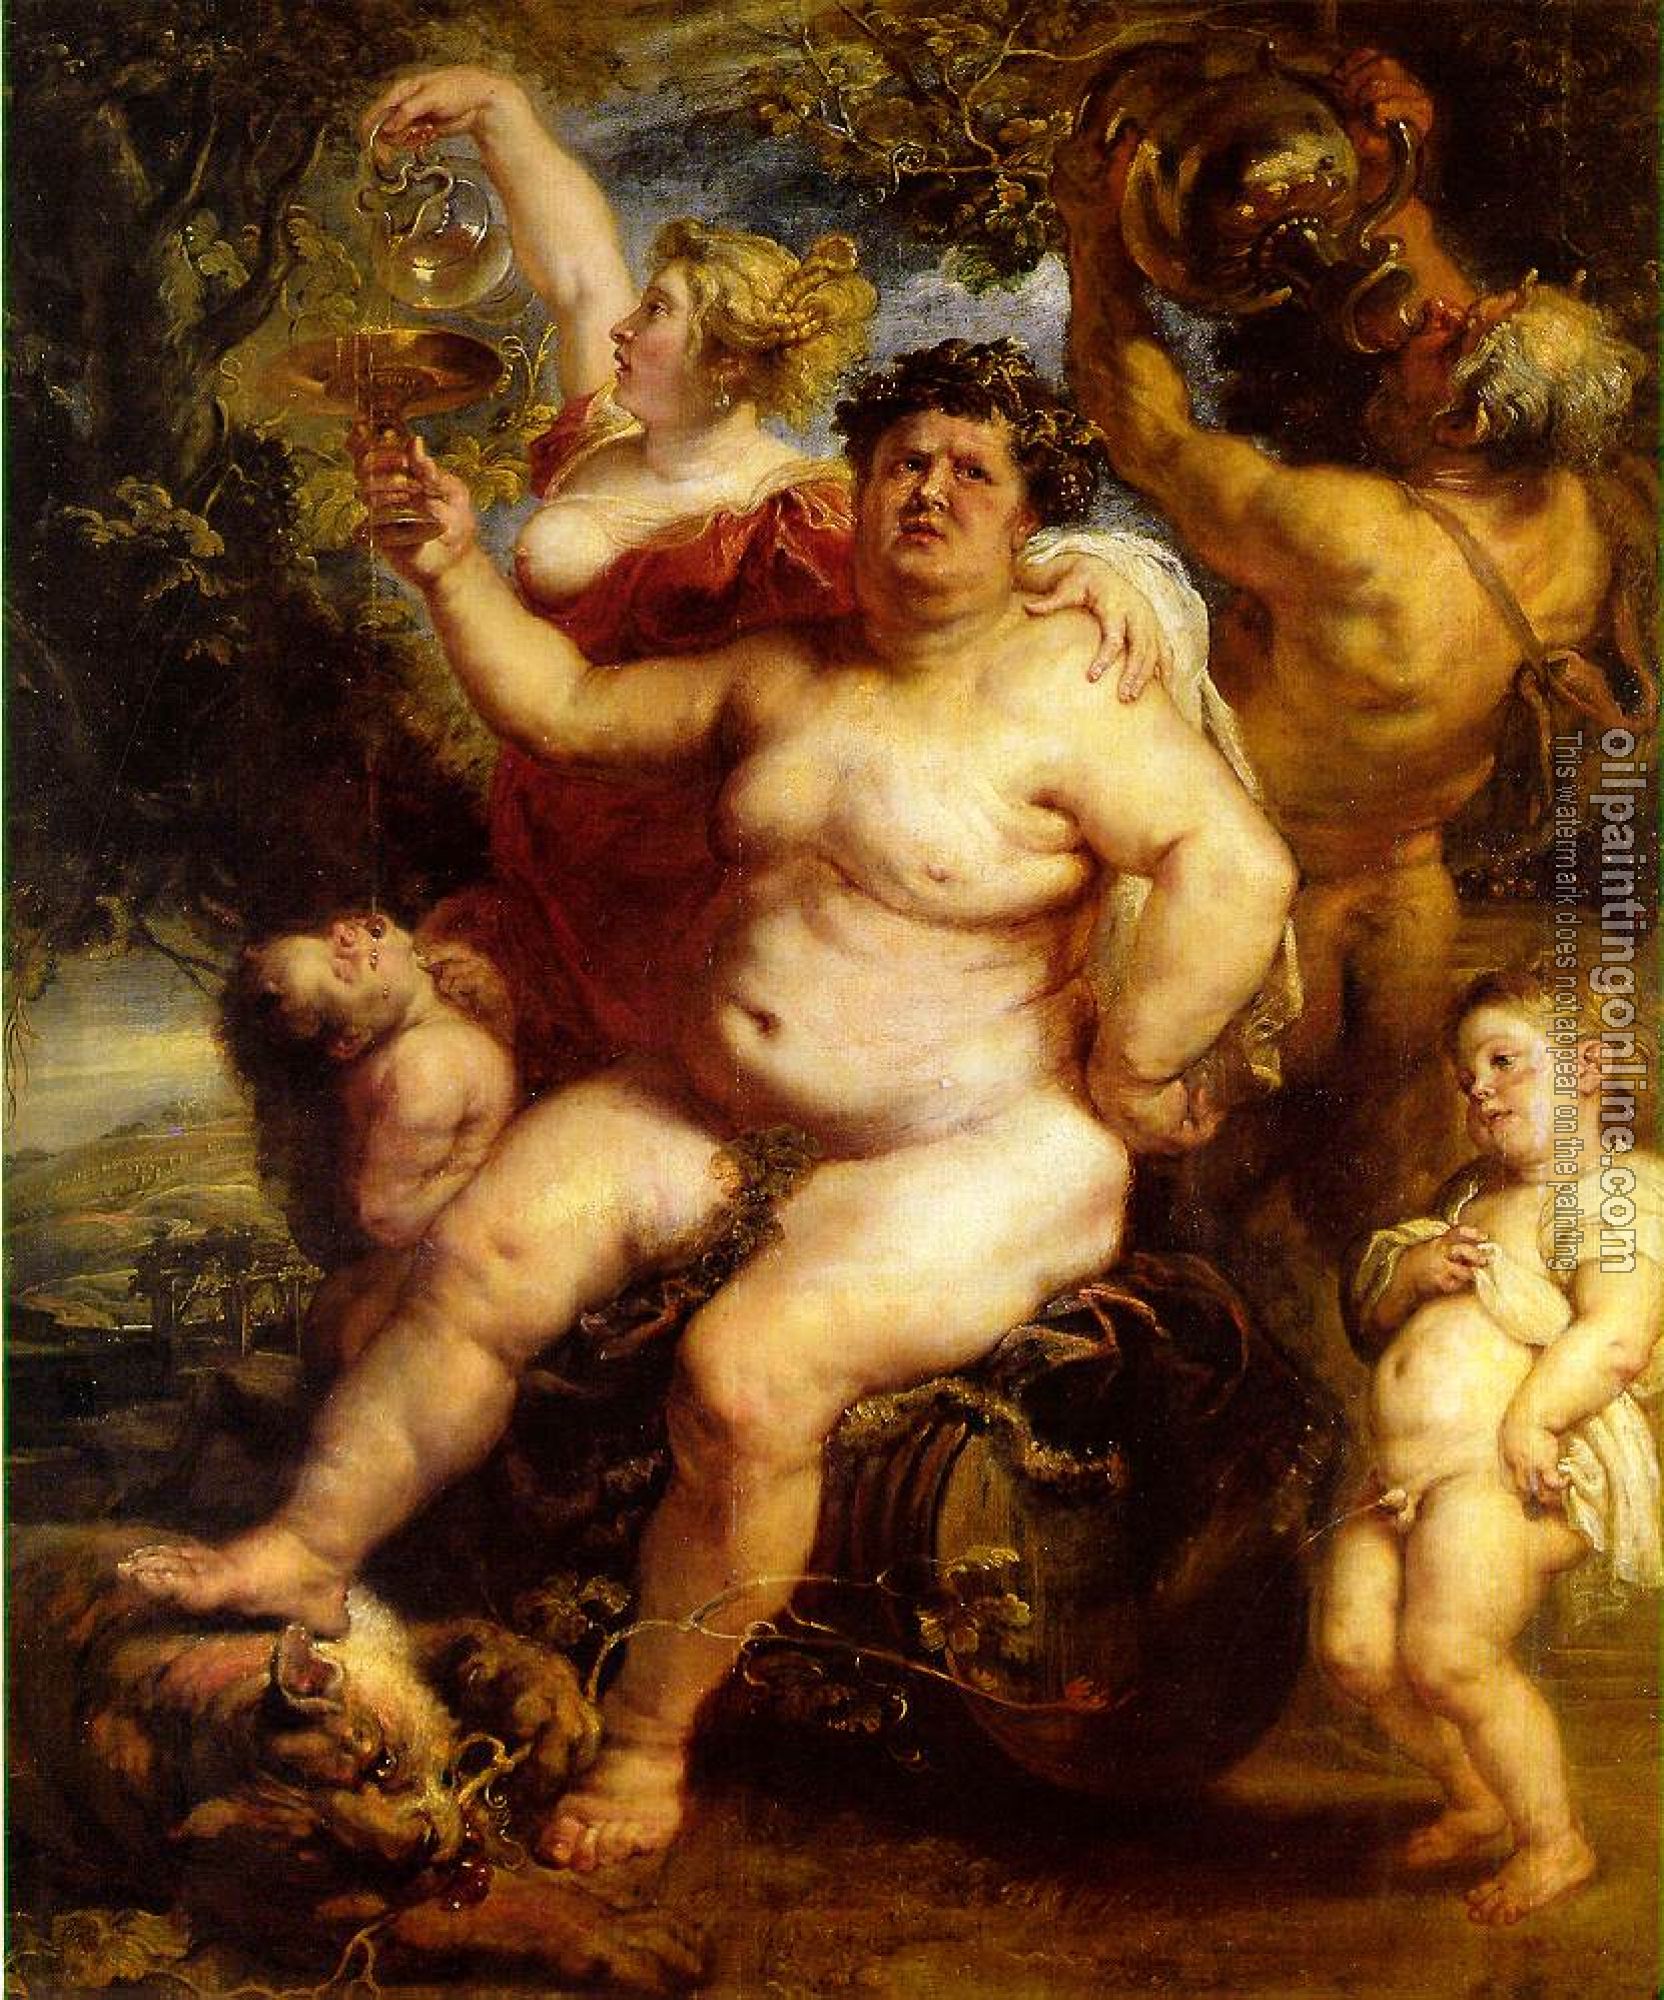 Rubens, Peter Paul - Bacchus